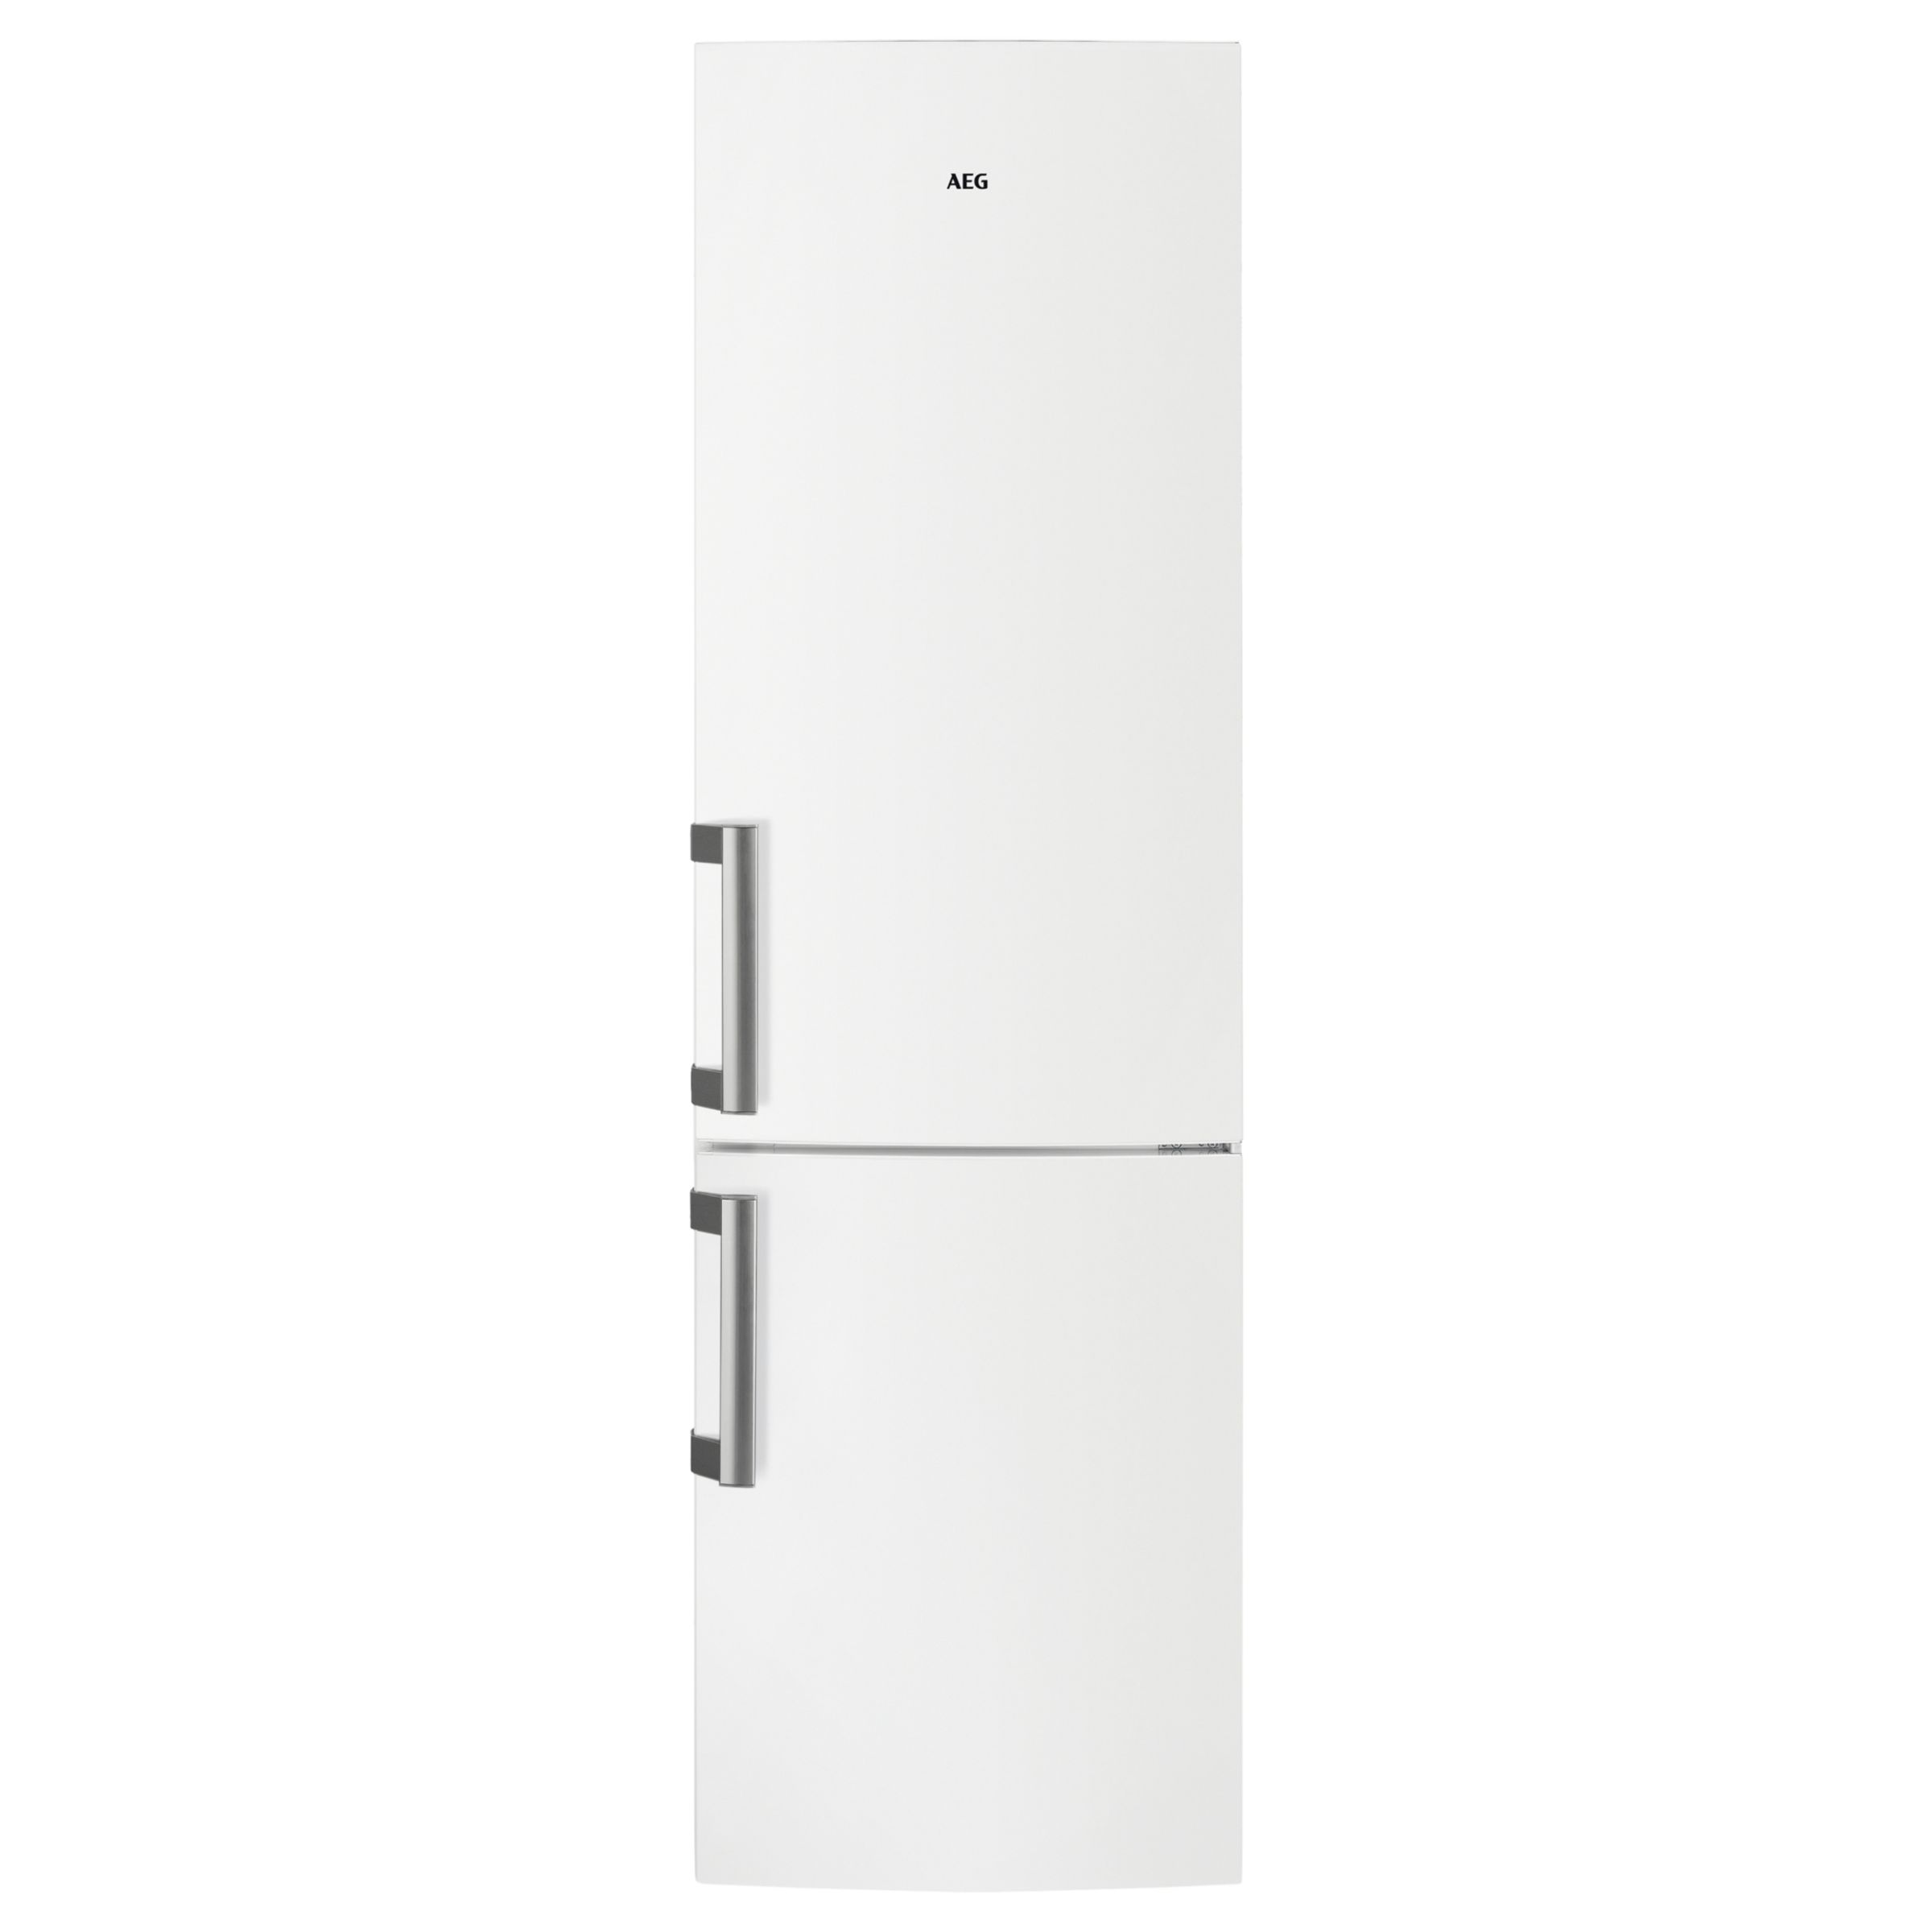 AEG RCB53725VW Freestanding CustomFlex Fridge Freezer, A++ Energy Rating, 60cm Wide, White